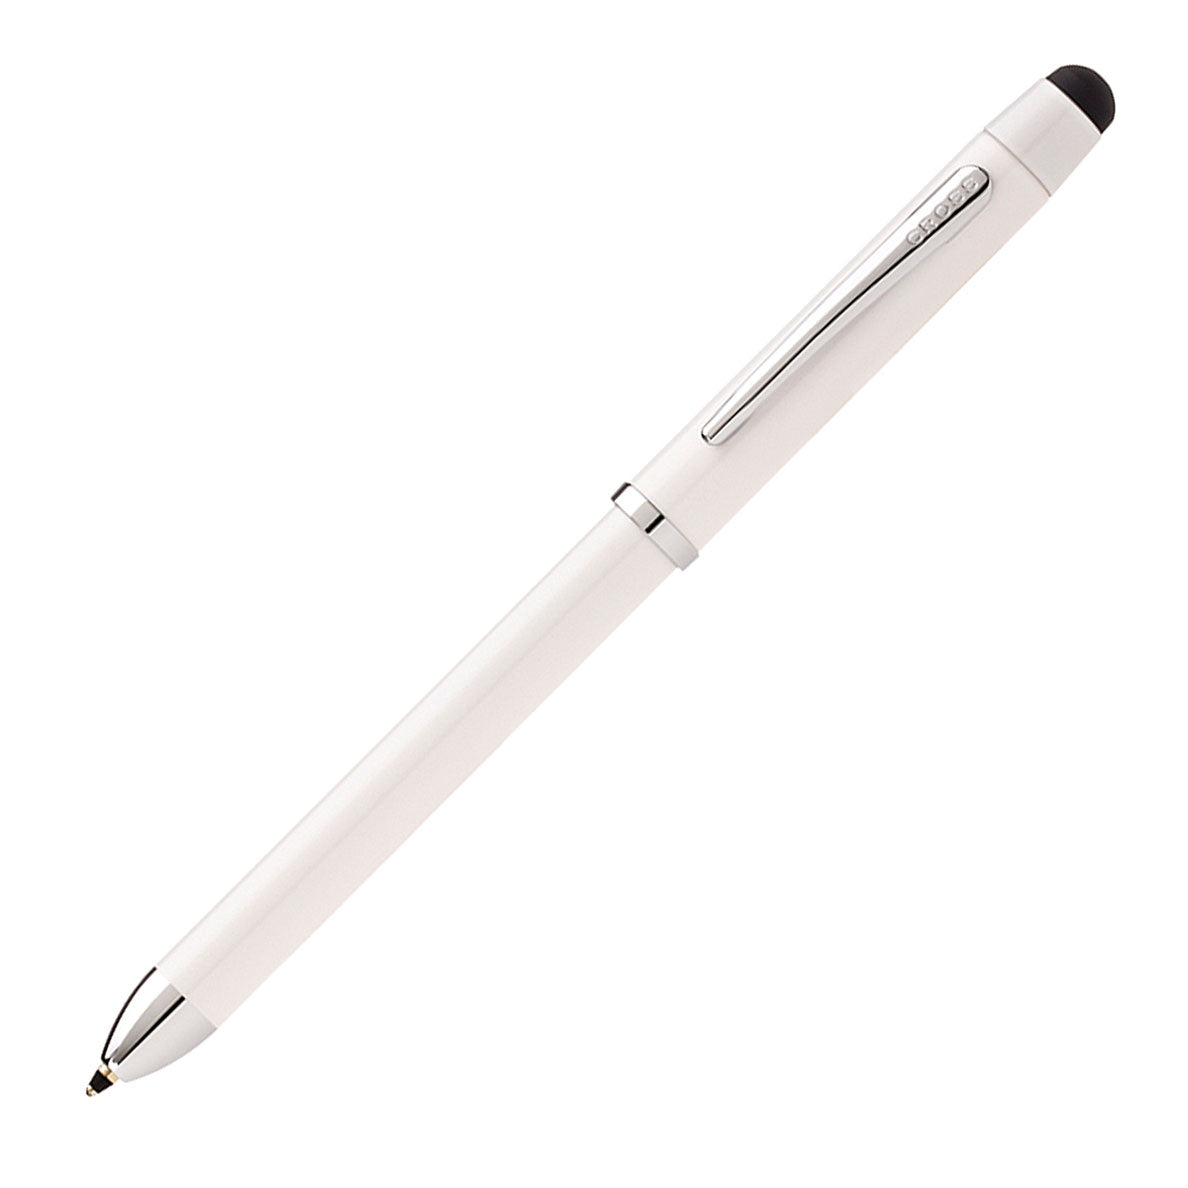 Cross Tech3 Multifunction Pen AT00909